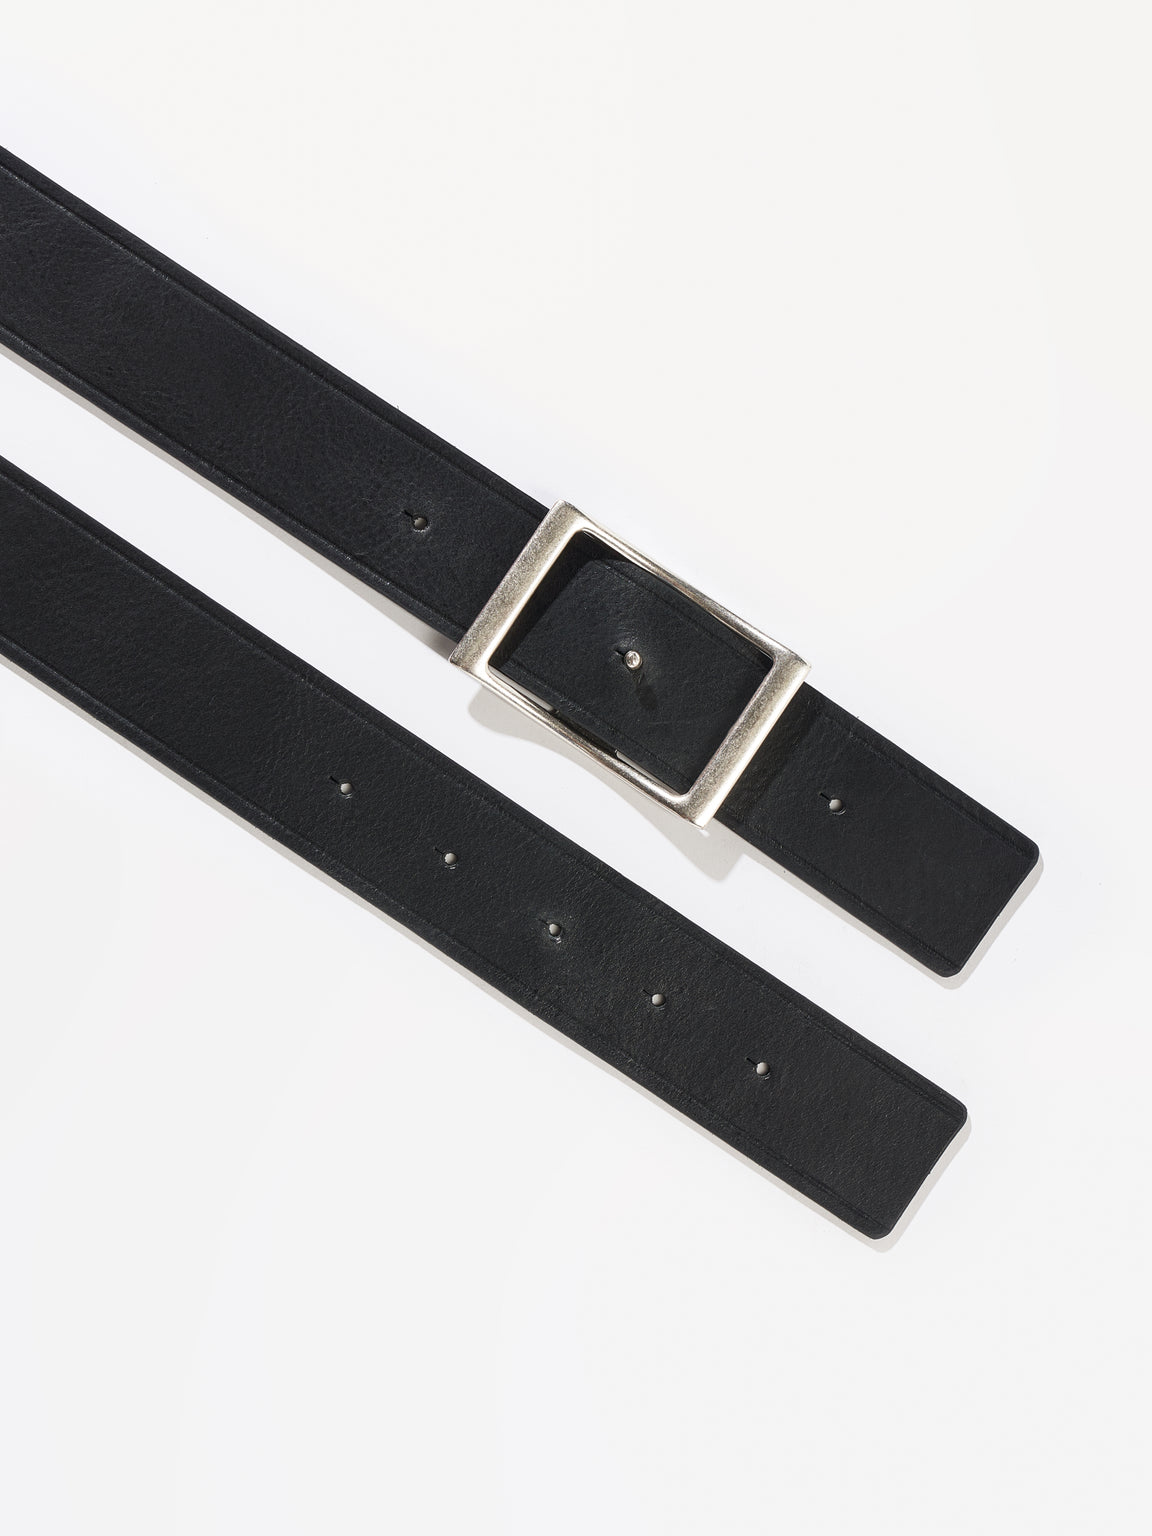 Sarie Belt - Black | Women Collection | Bellerose